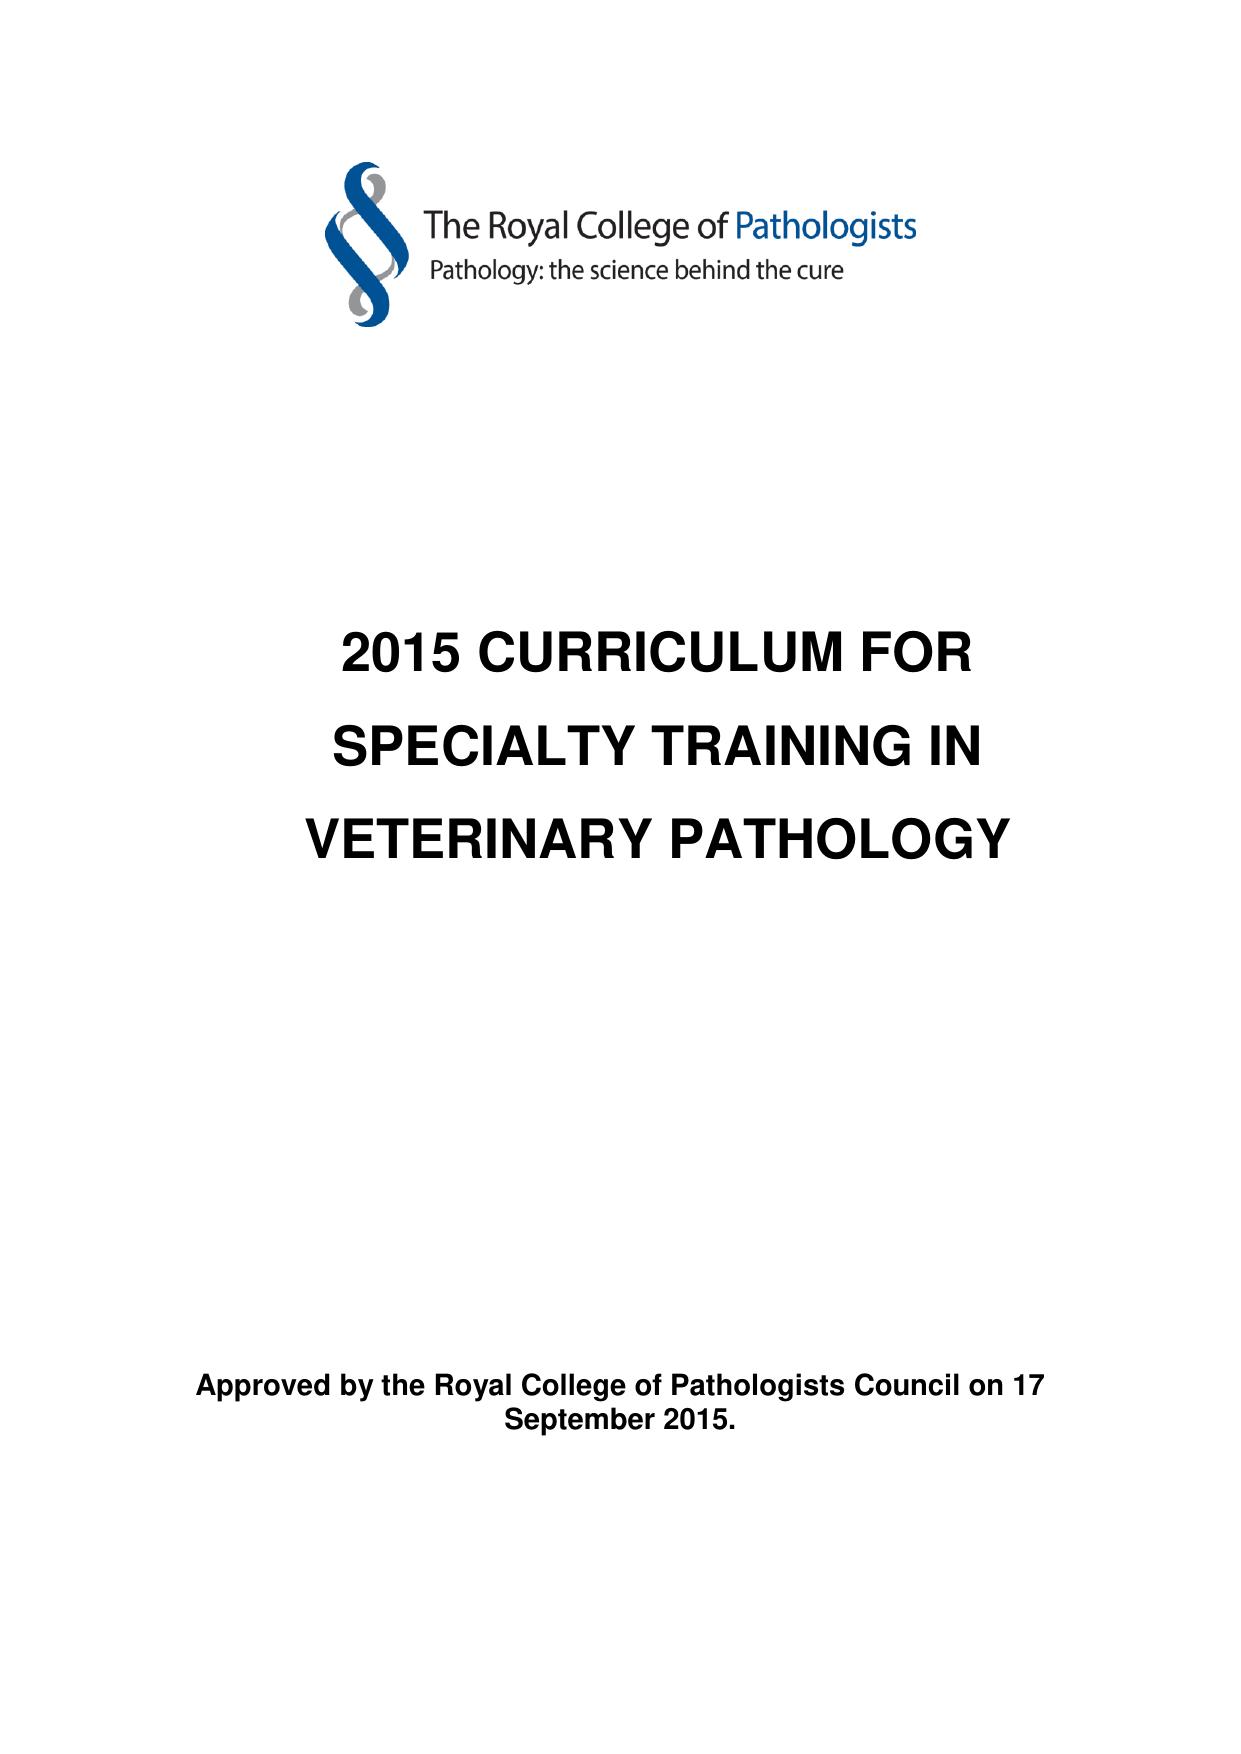 Veterinary Pathology curriculum